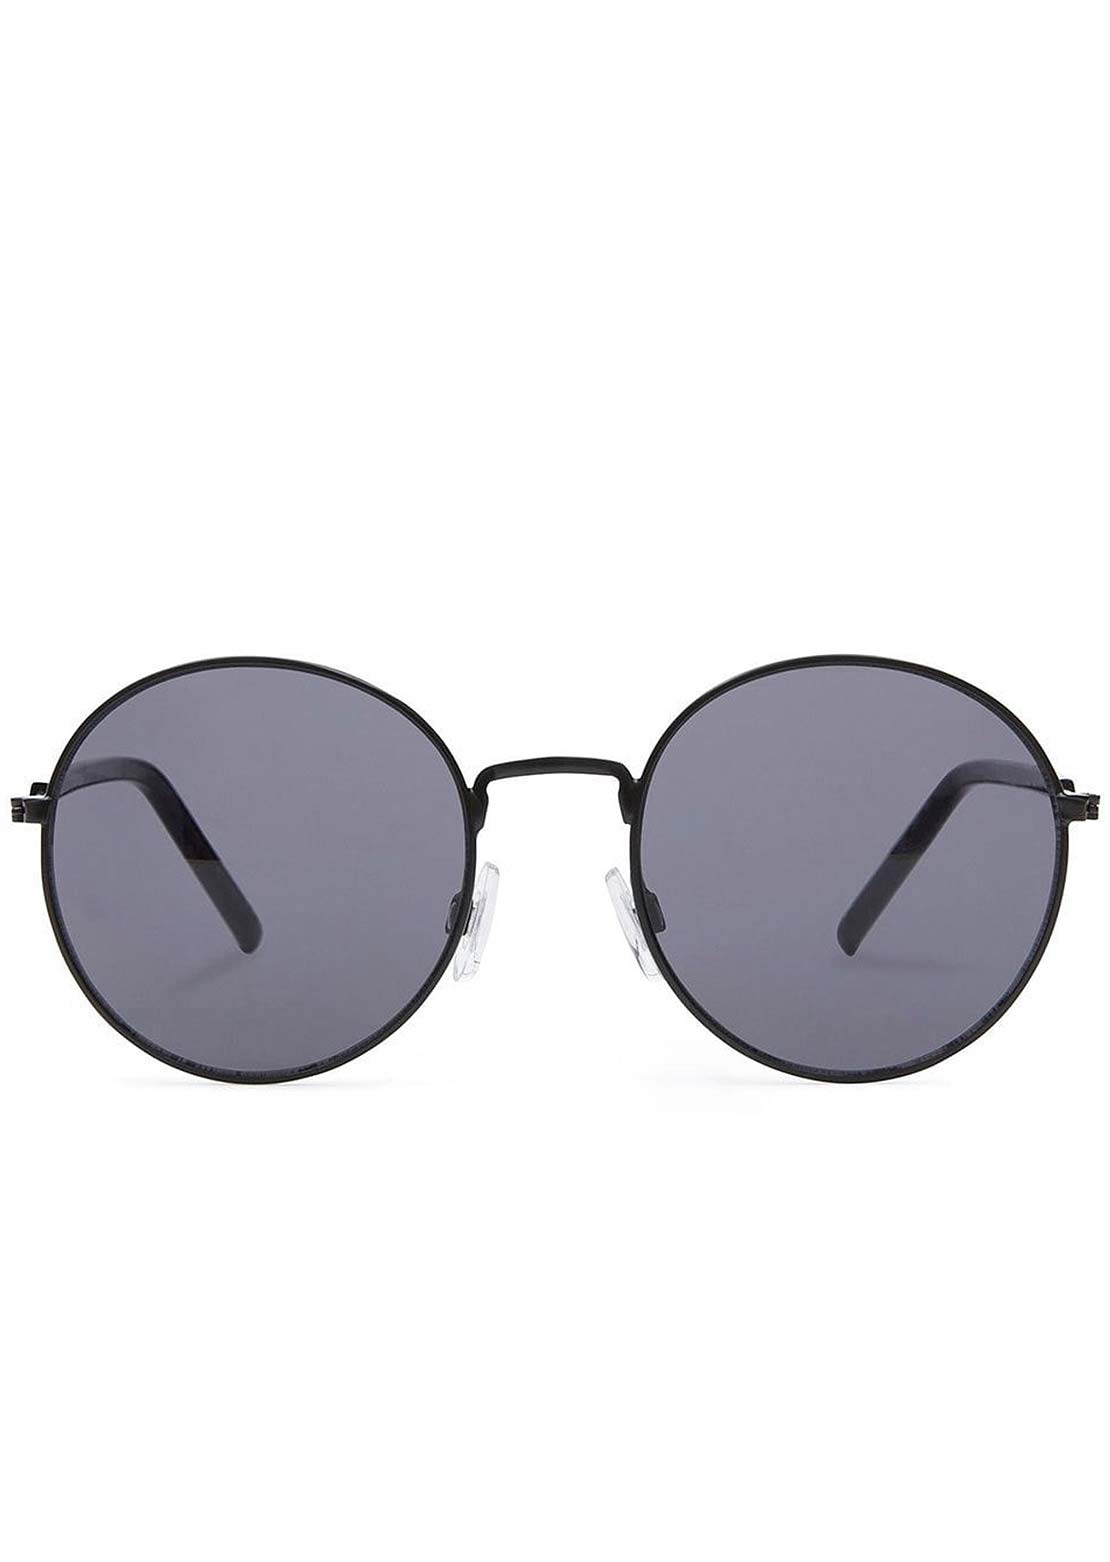 Vans Unisex Leveler Sunglasses Black